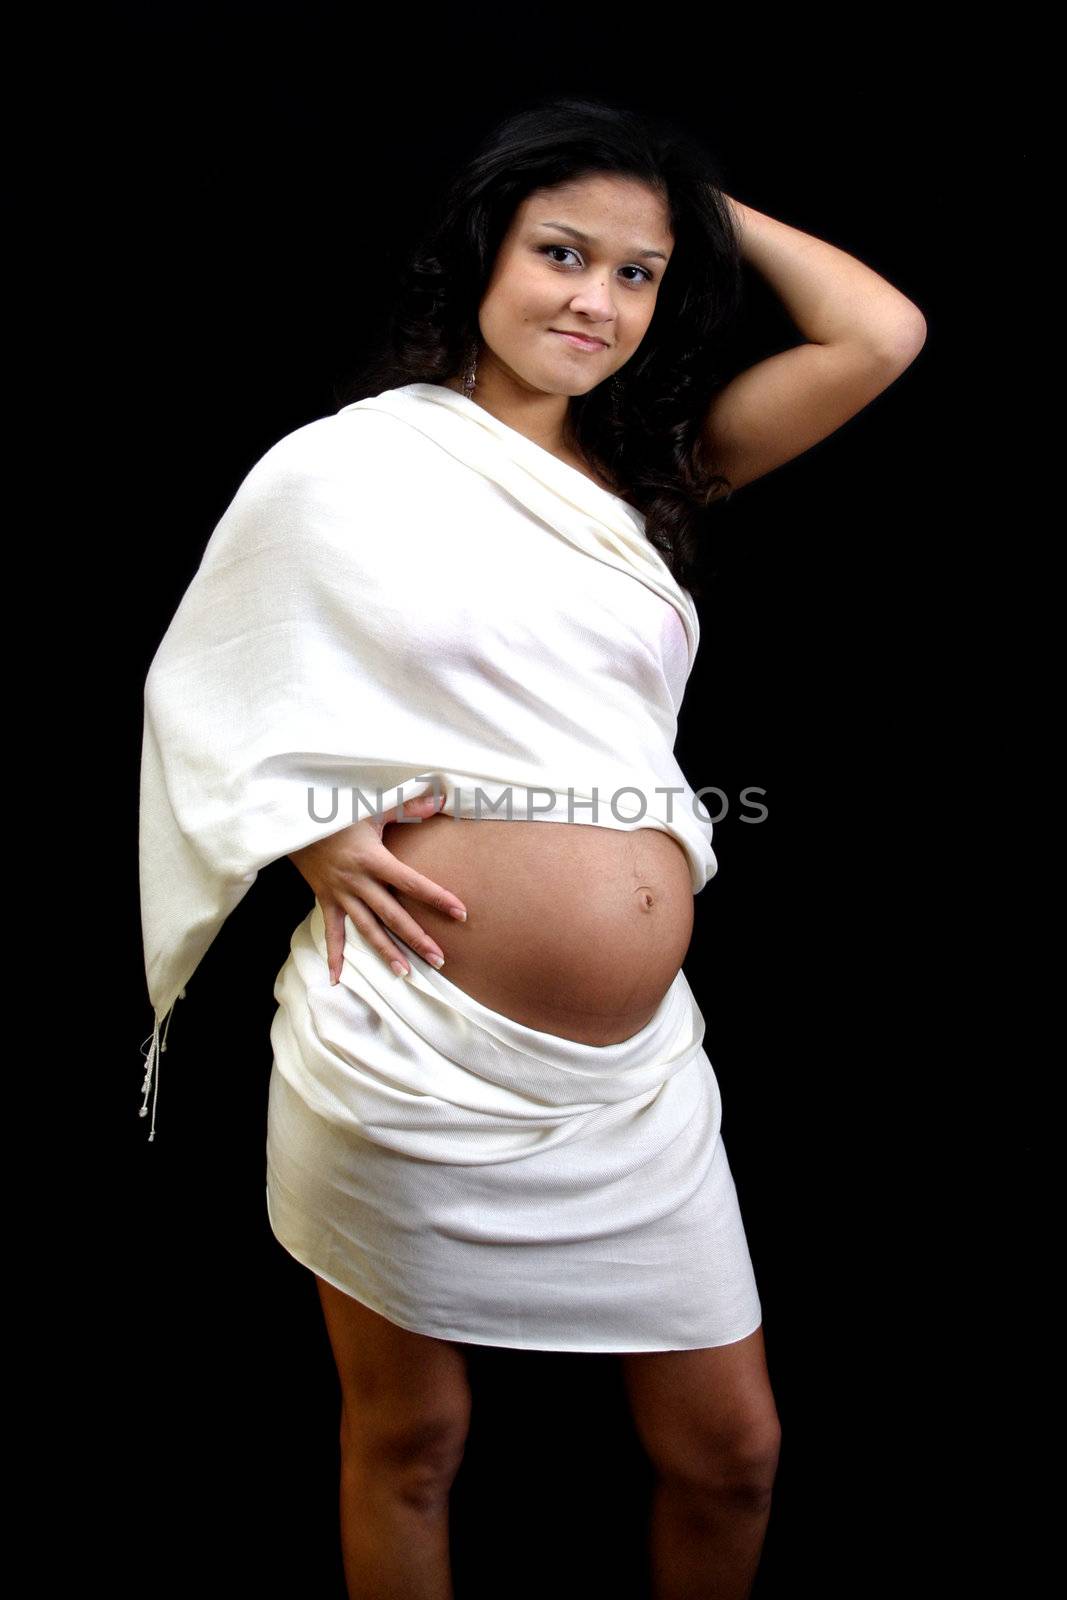 photo of pregnant female by jpcasais